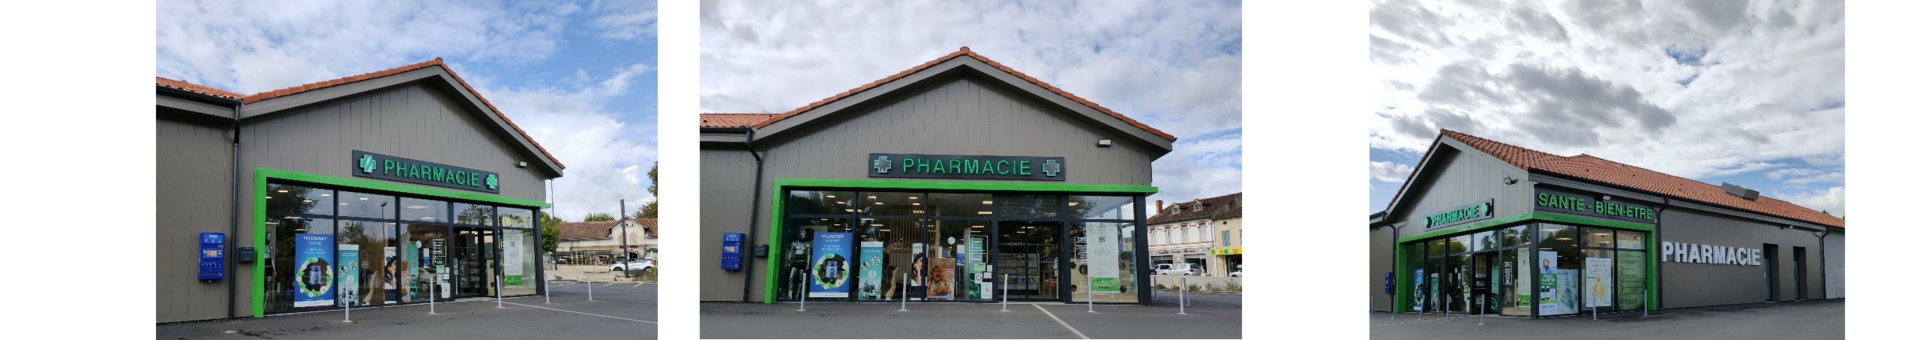 Pharmacie de la Liberté,Villeneuve-de-Marsan